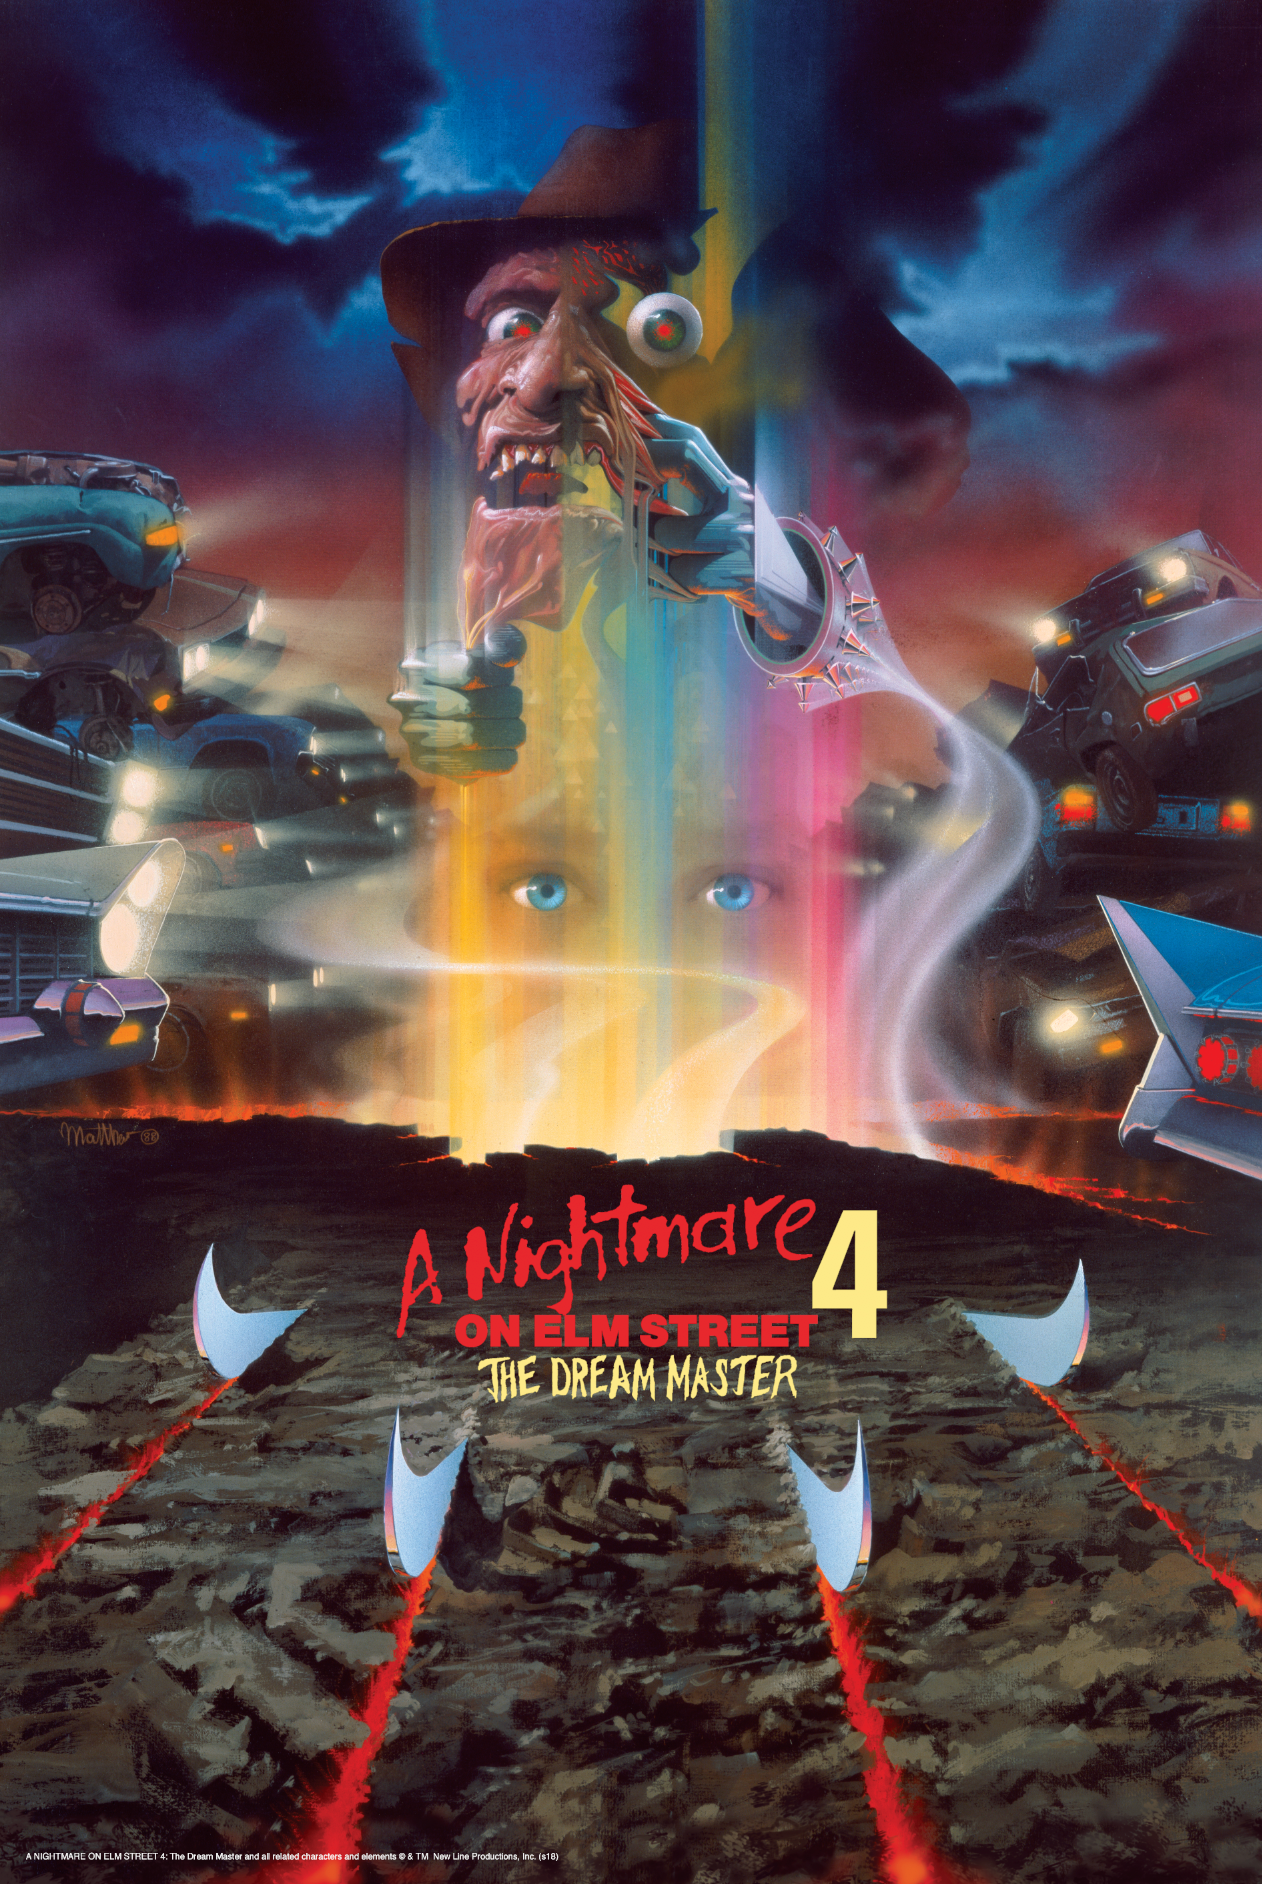 Matthew Peak "A Nightmare on Elm Street 4: The Dream Master" AP